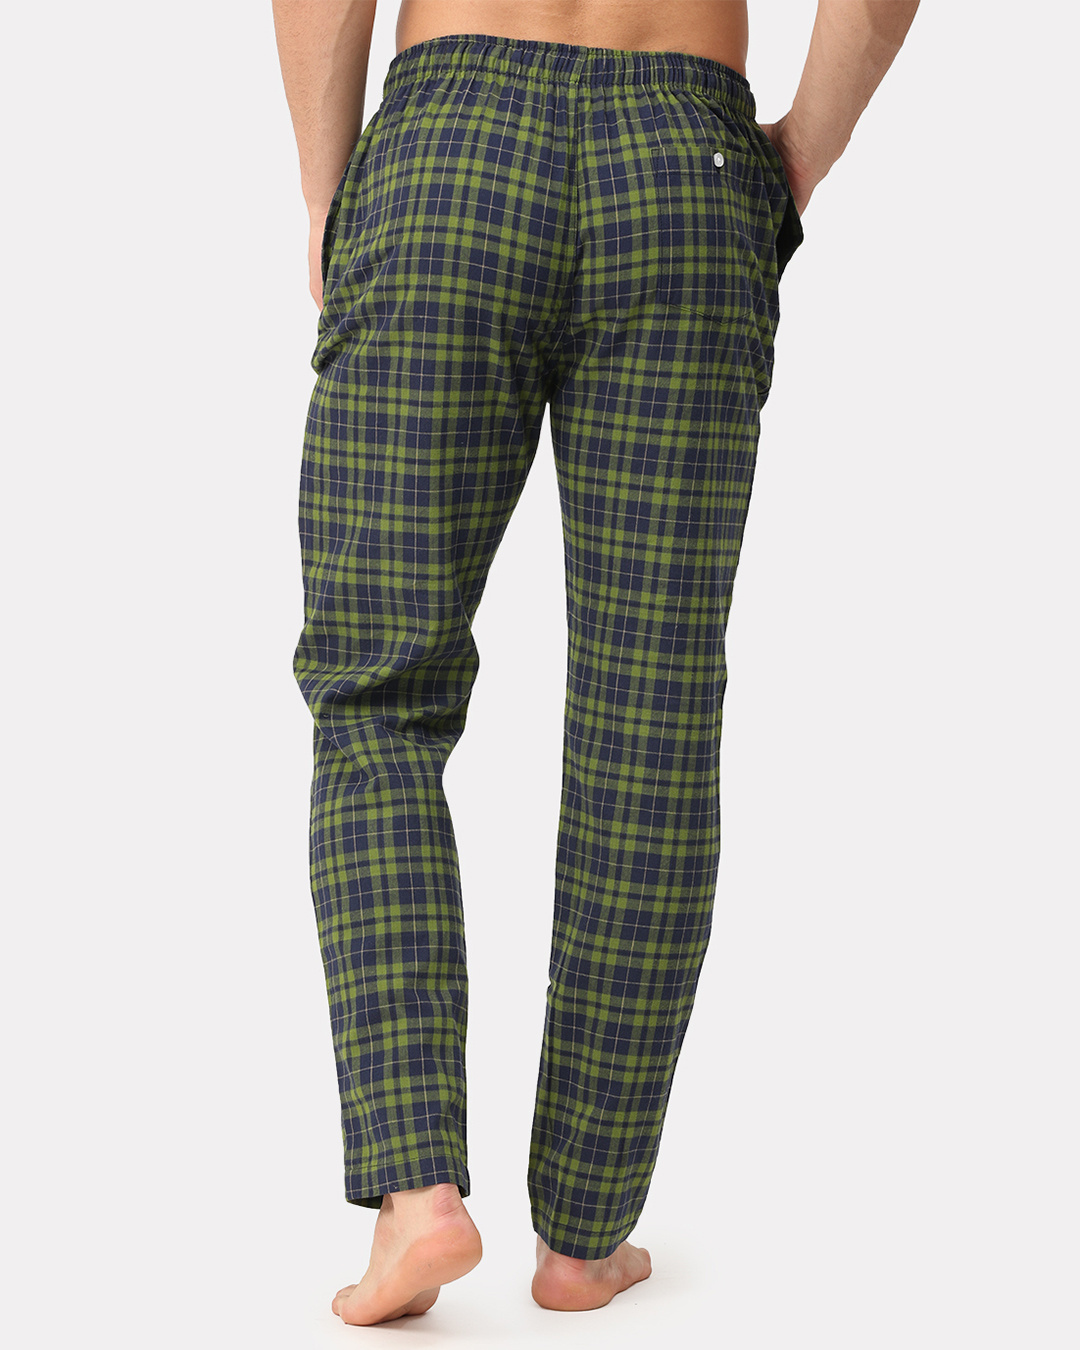 Shop Men's Green & Blue Checked Cotton Pyjamas-Back